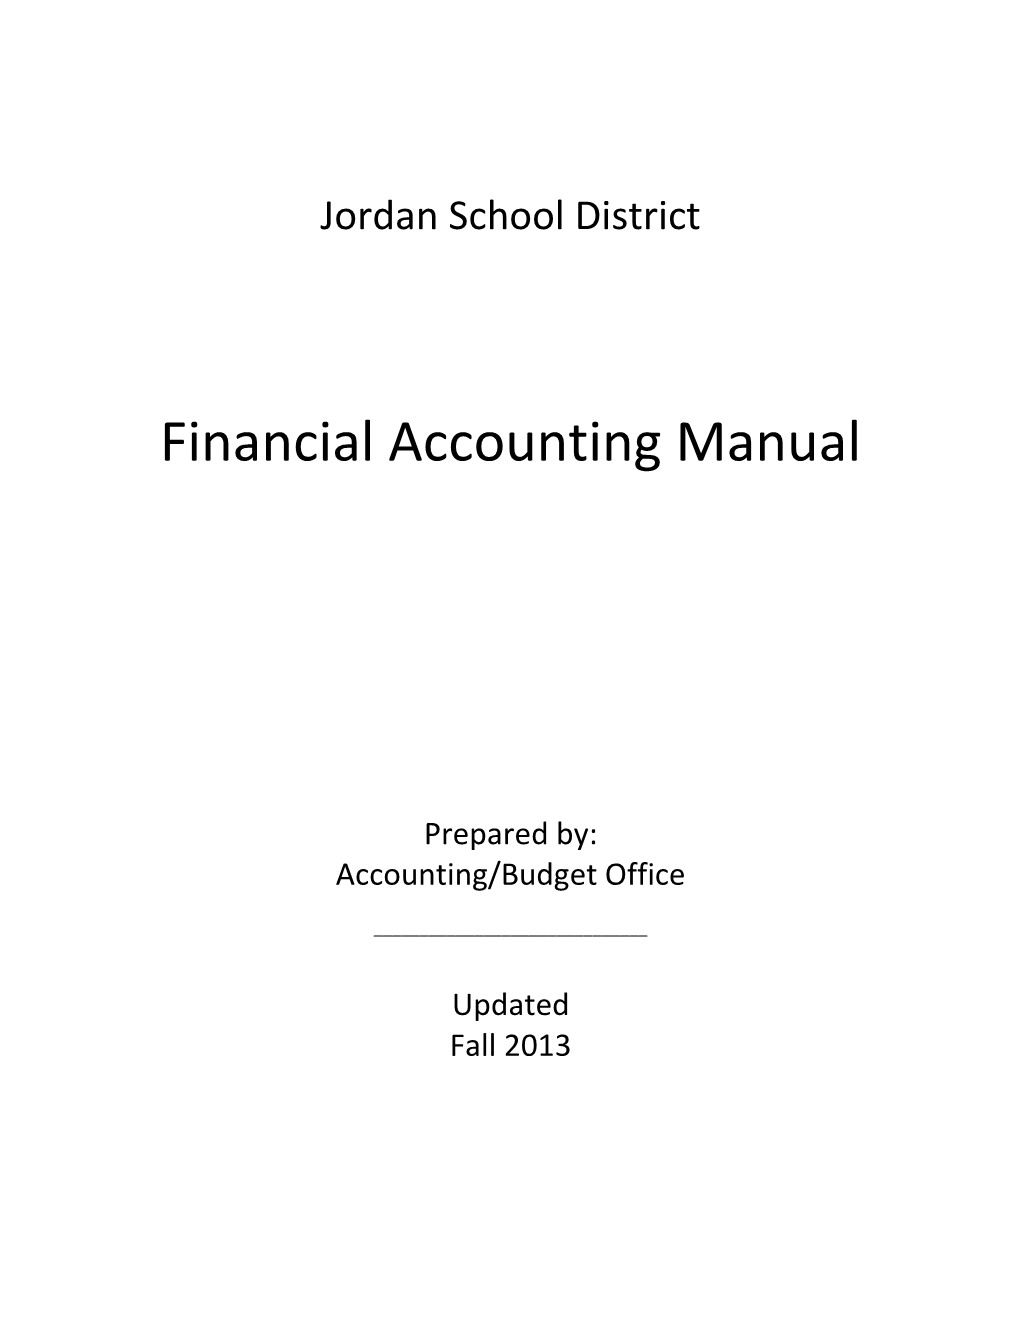 Jordan School District Financial Accounting Manual